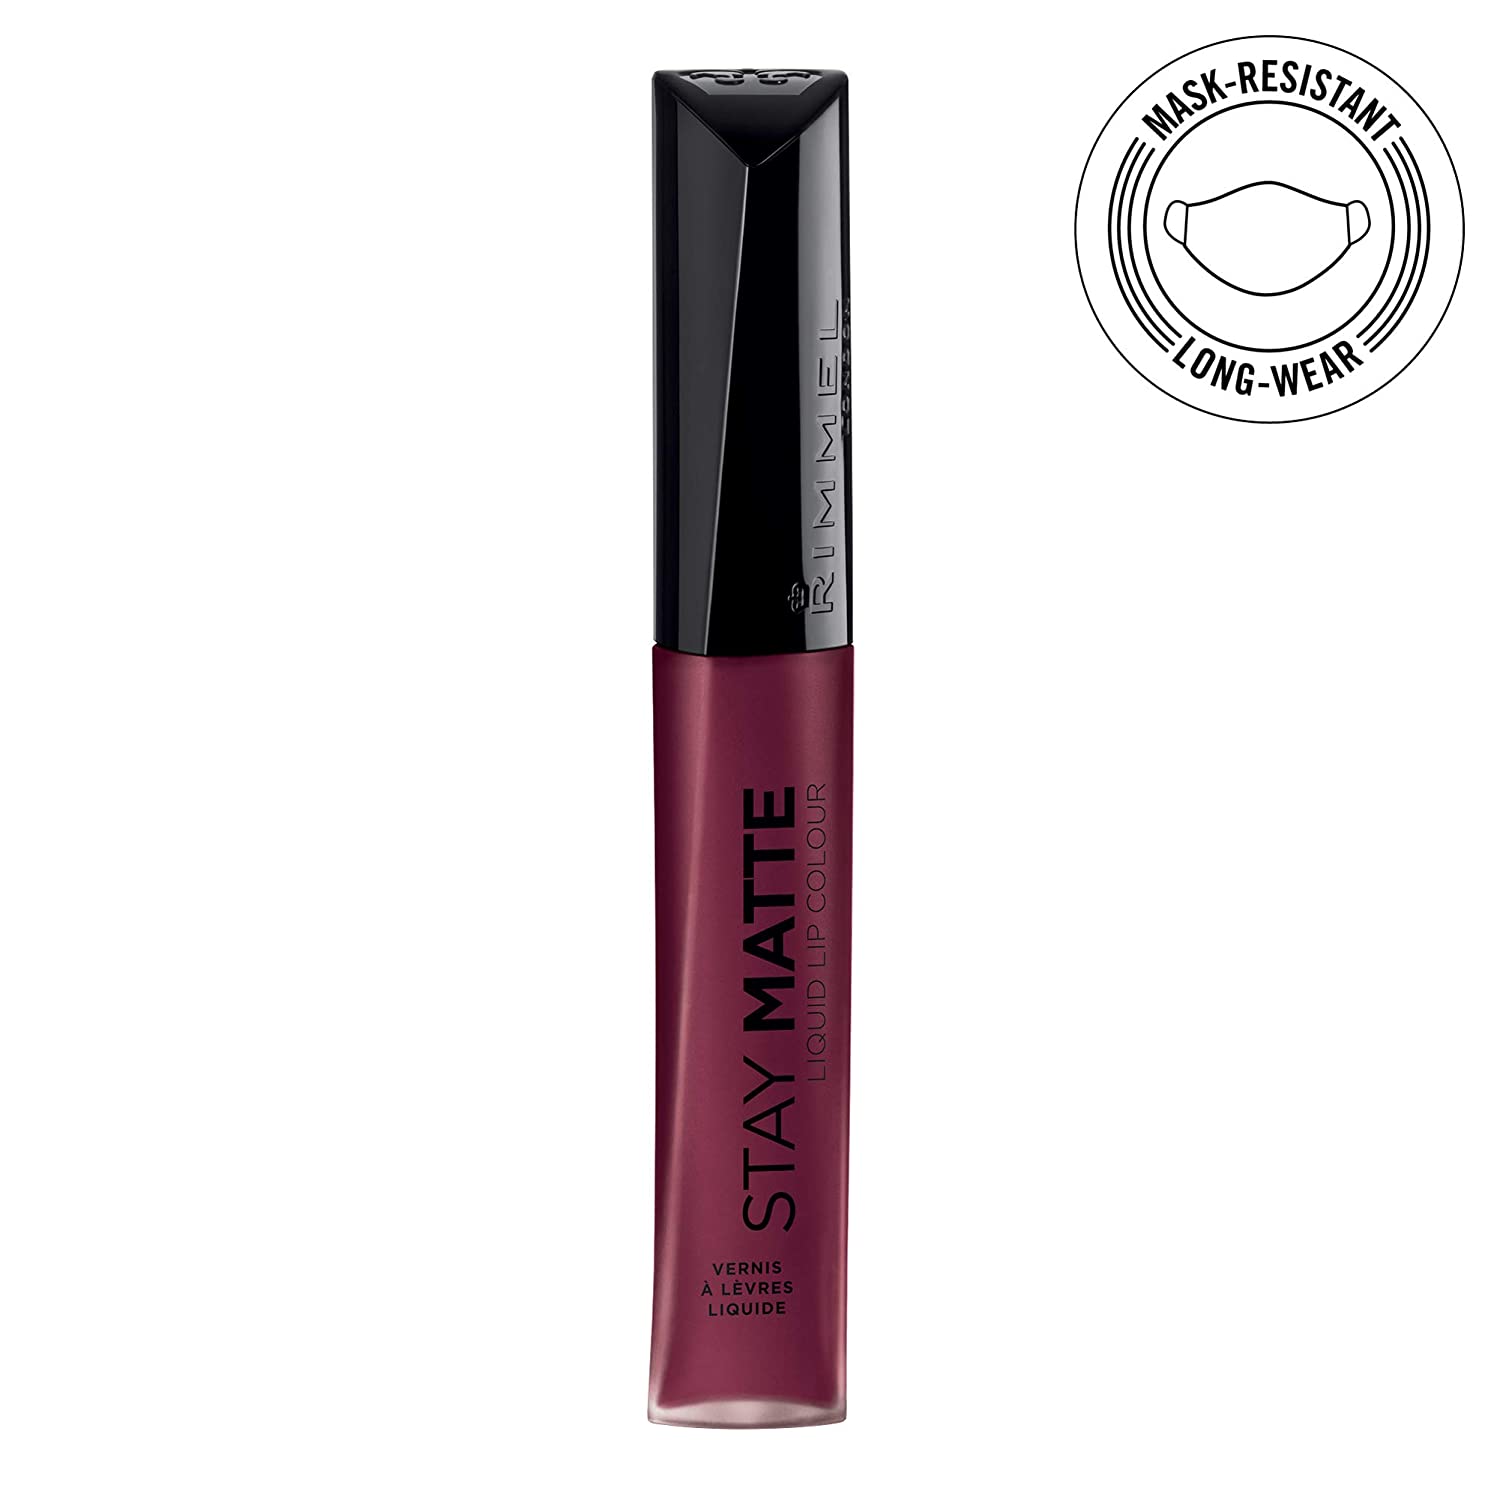 0.21-Oz Rimmel Stay Matte Liquid Lip Color Lipstick (Plum This Show or Trust You) $1.10 w/ S&S + Free S&H w/ Prime or $25+